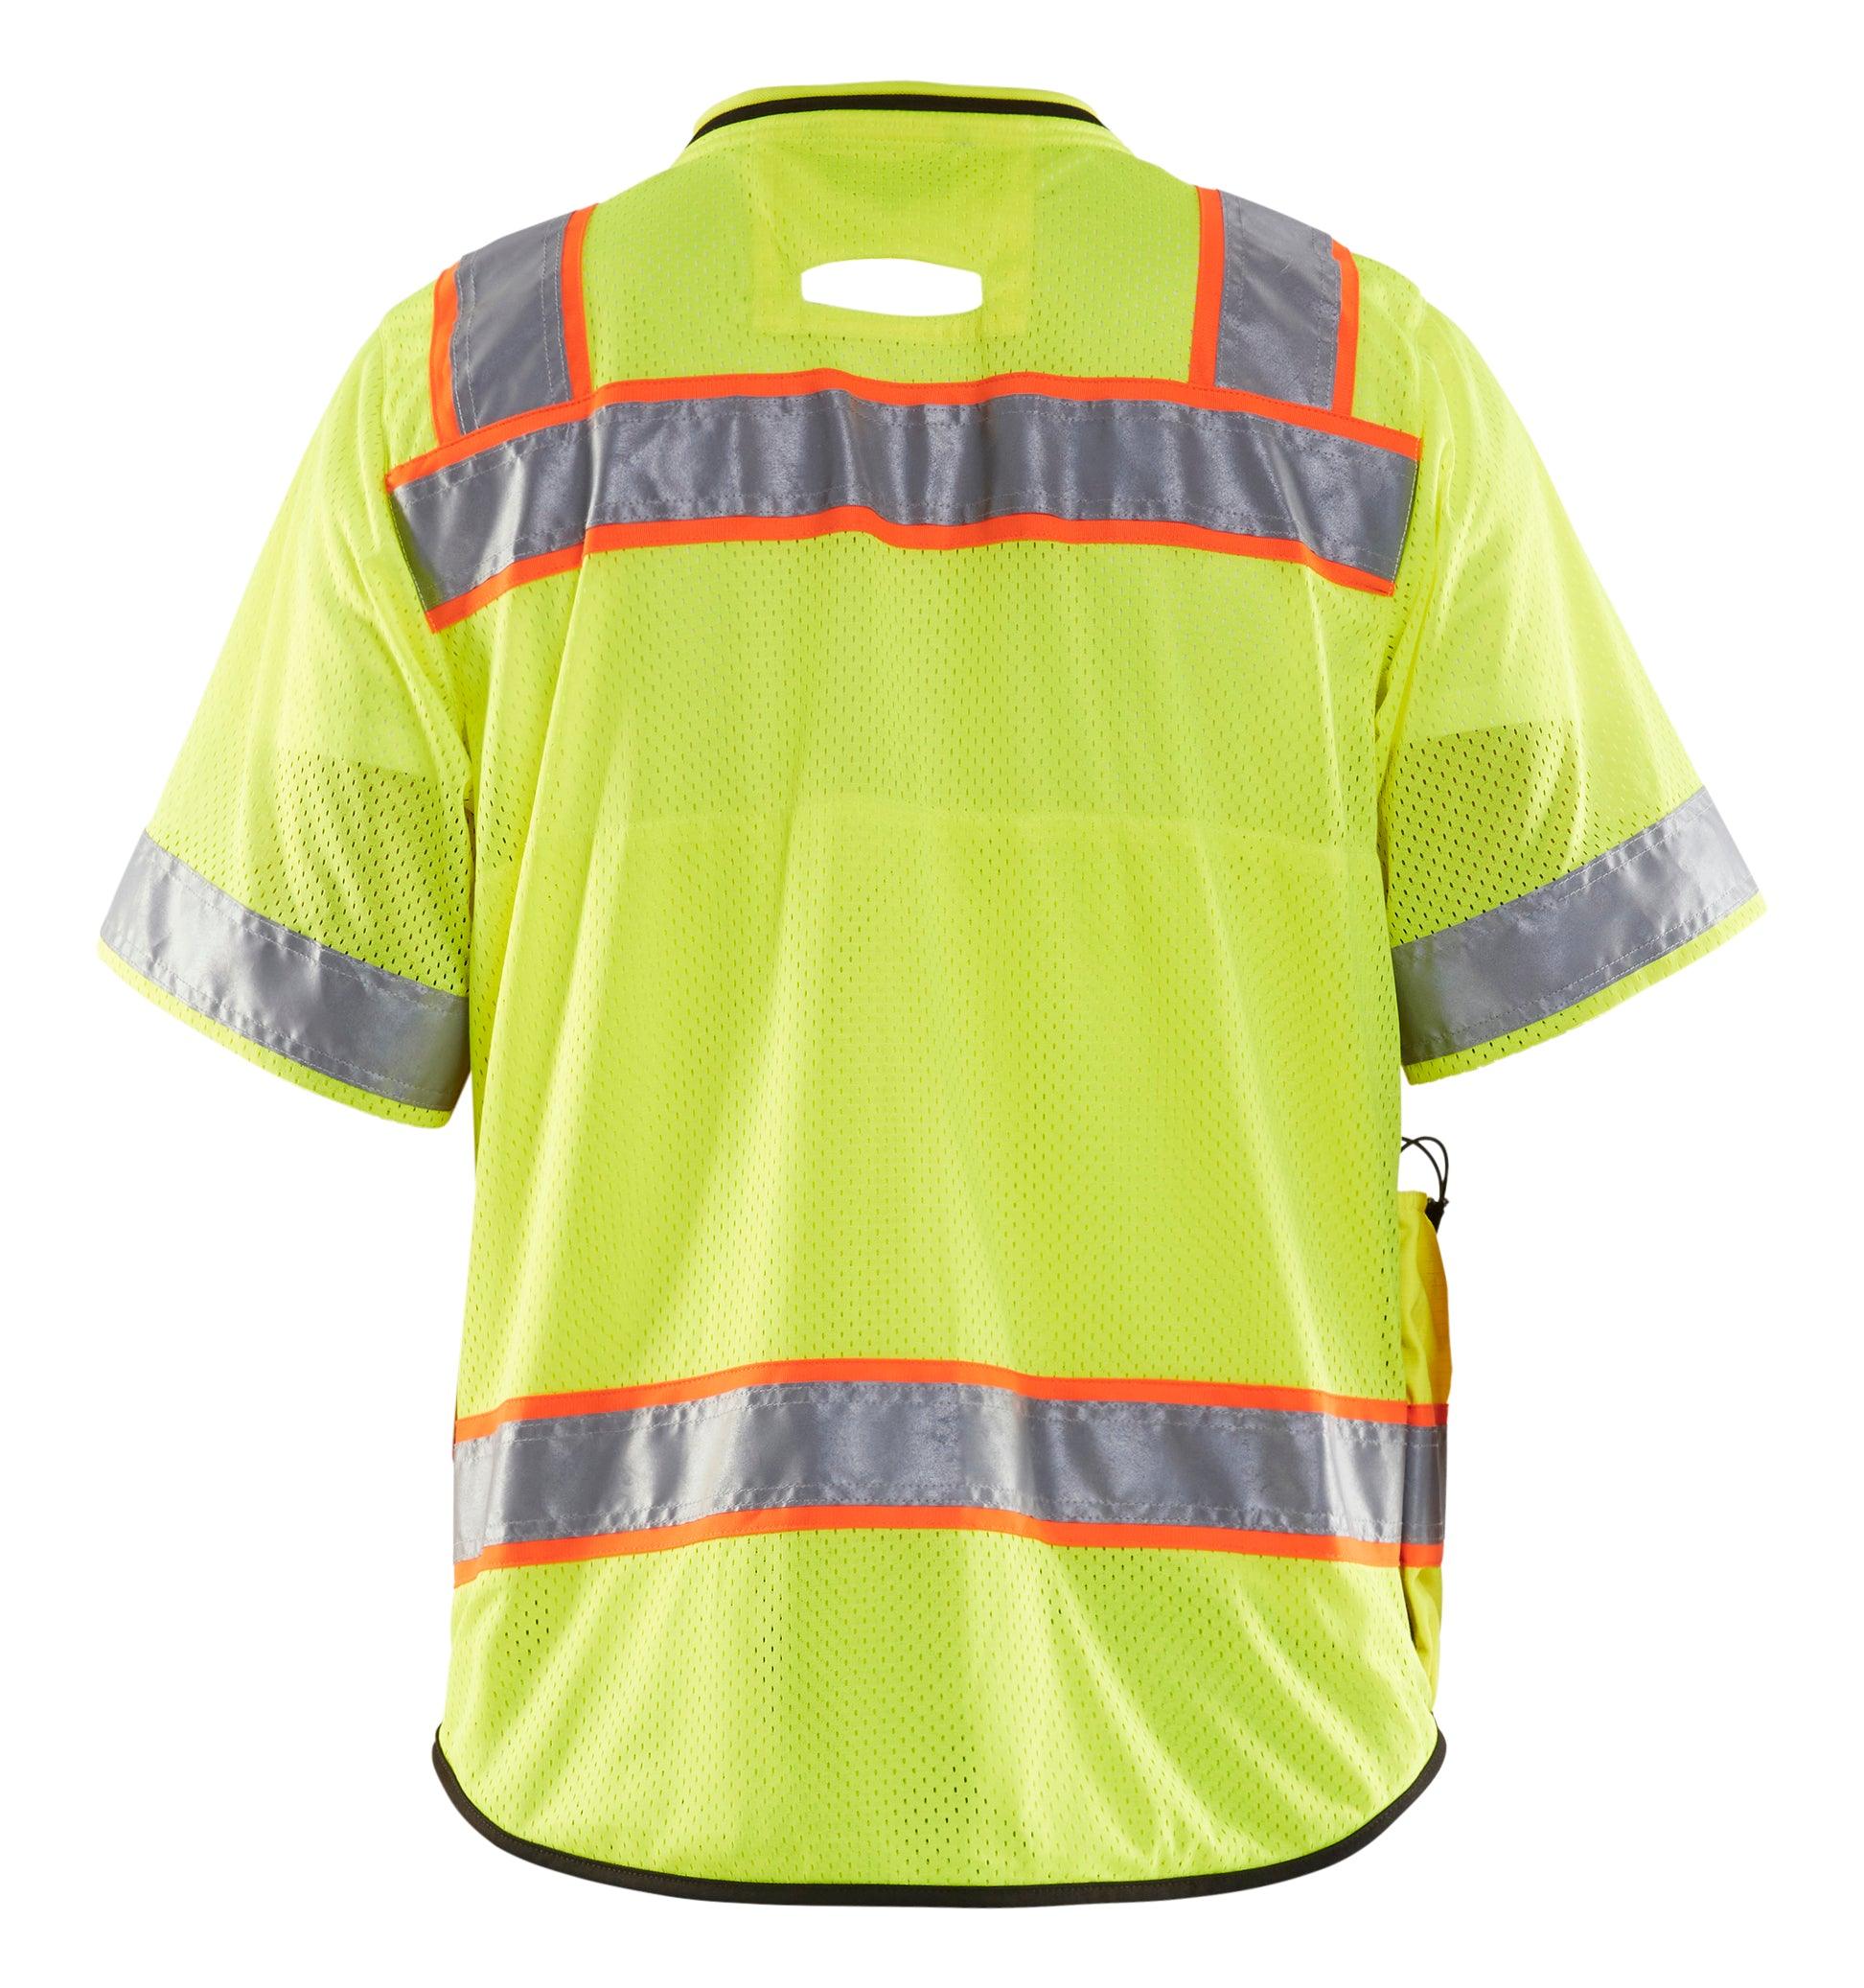 Blaklader 3139 Hi-Vis Class 3 Surveyor Safety Vest - Yellow Hi-Vis/Black - Trusted Gear Company LLC